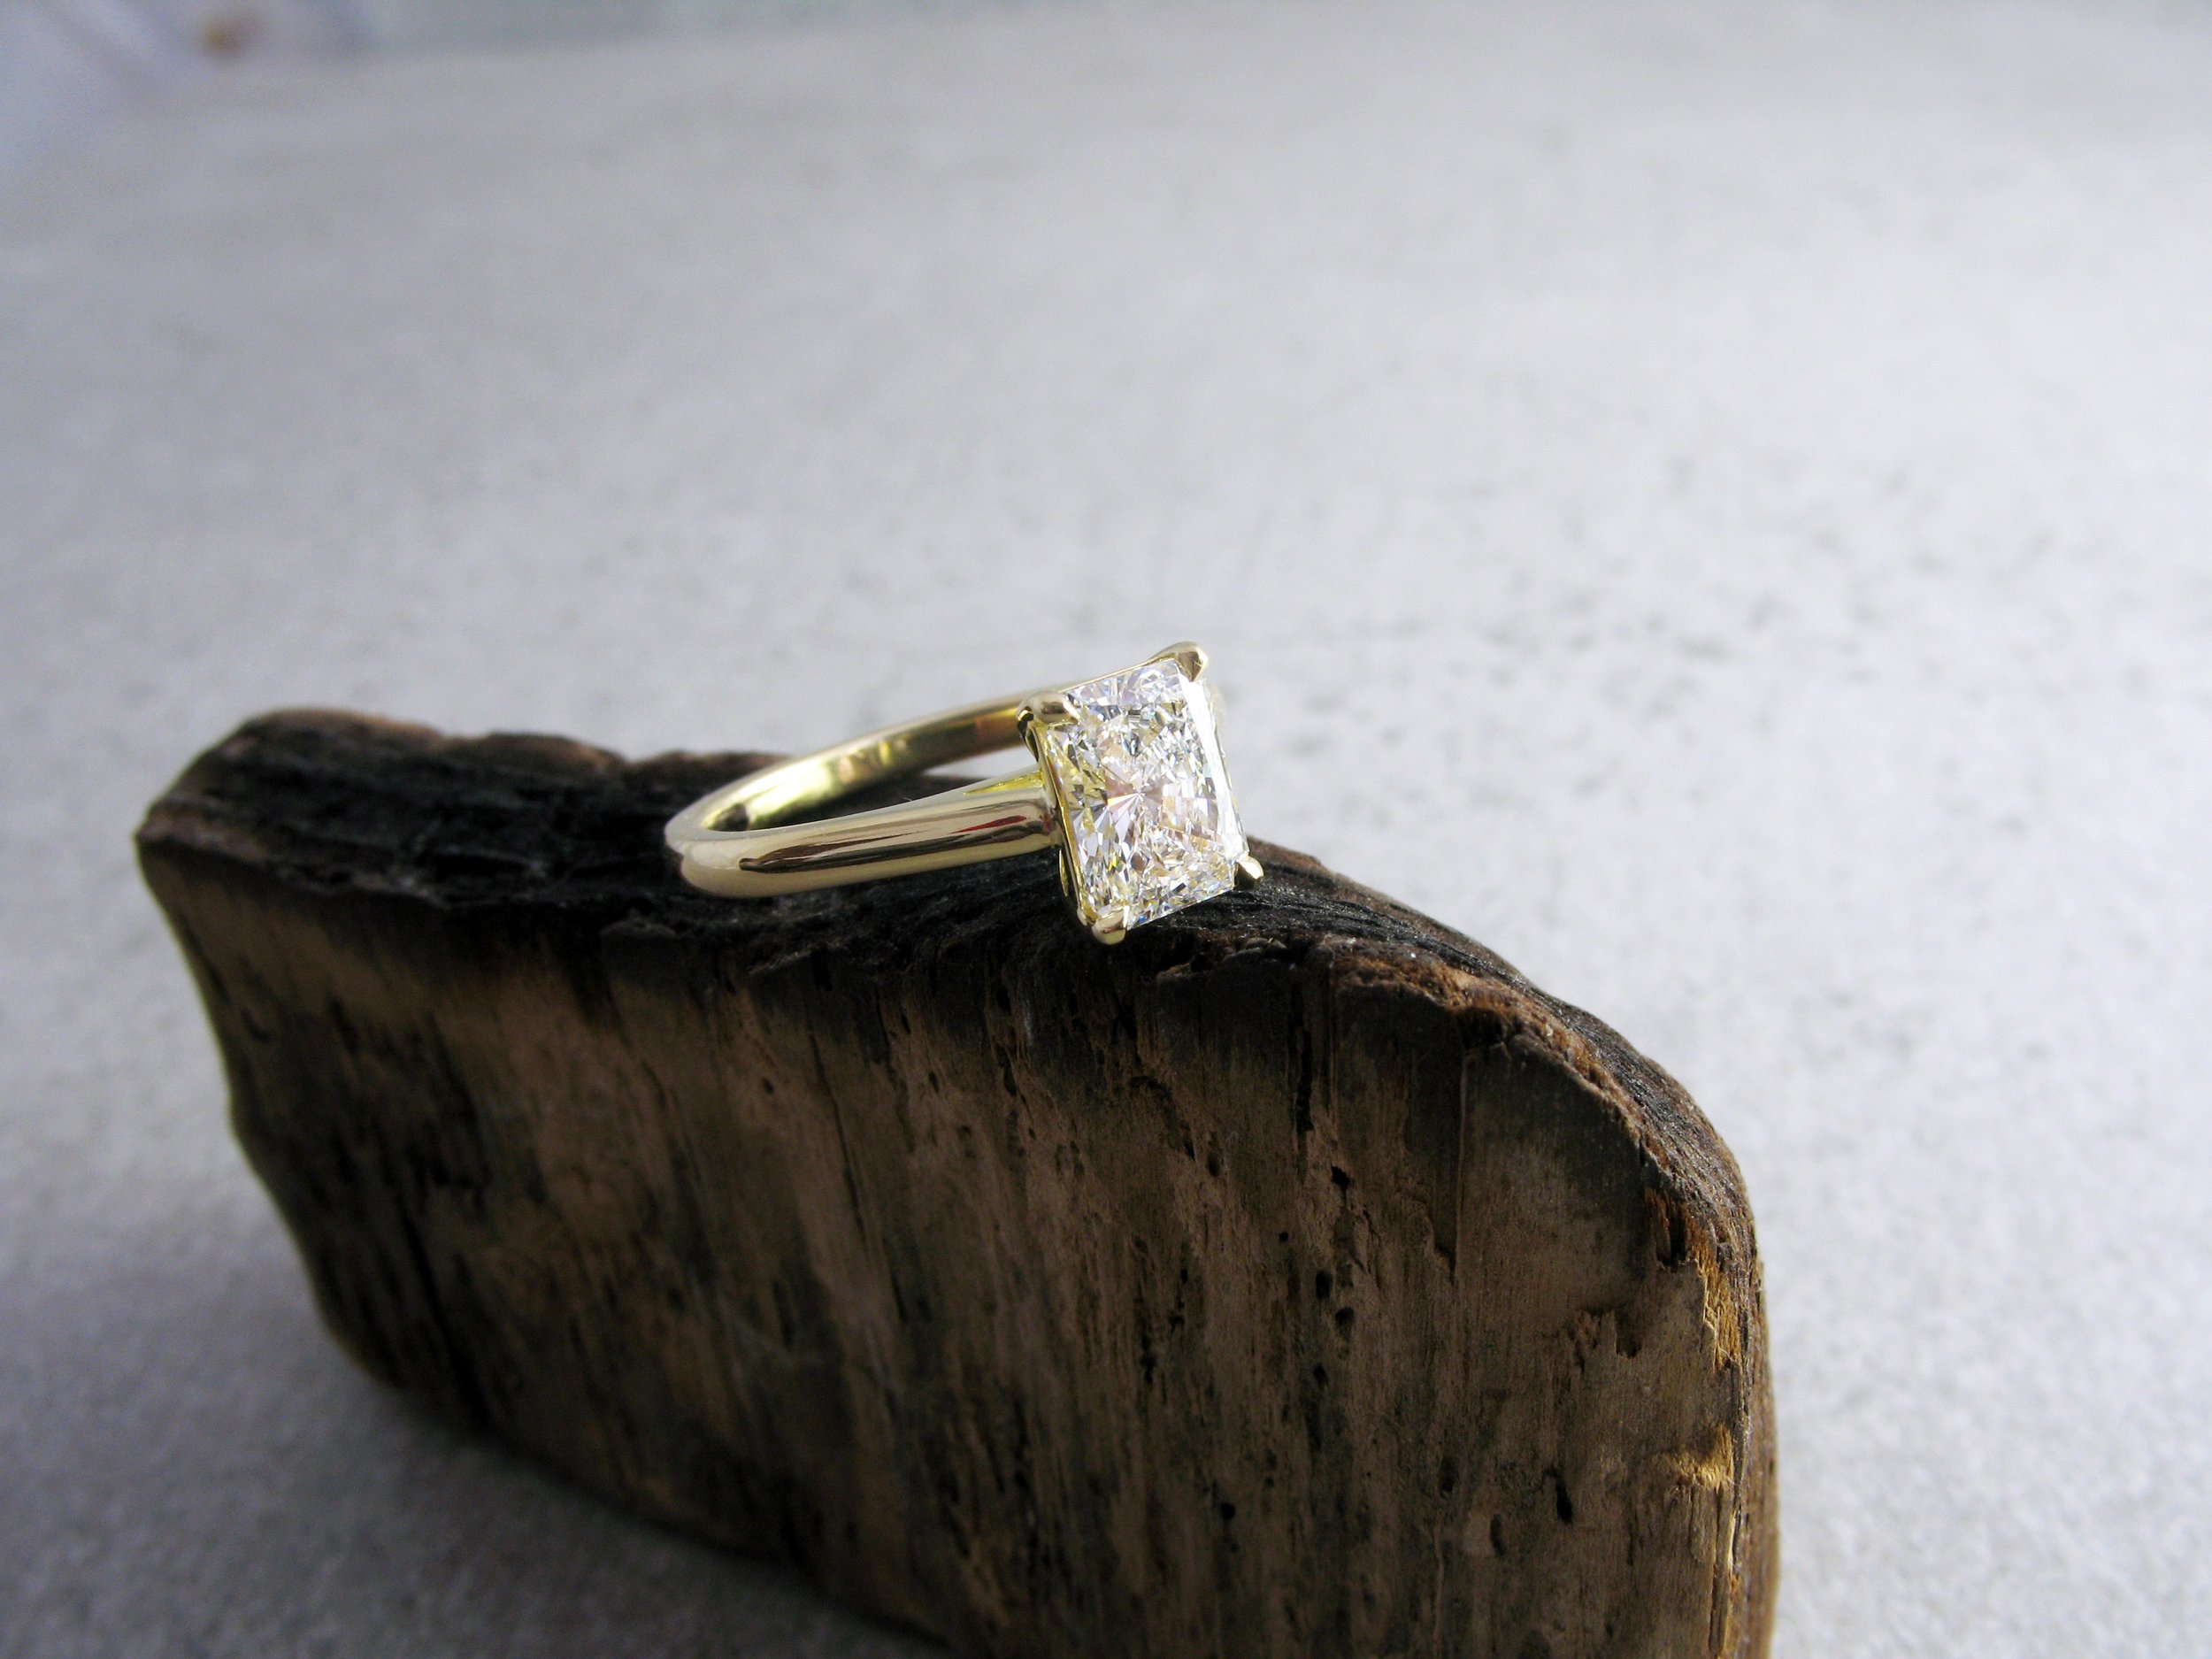 A gorgeous radiant cut diamond engagement ring